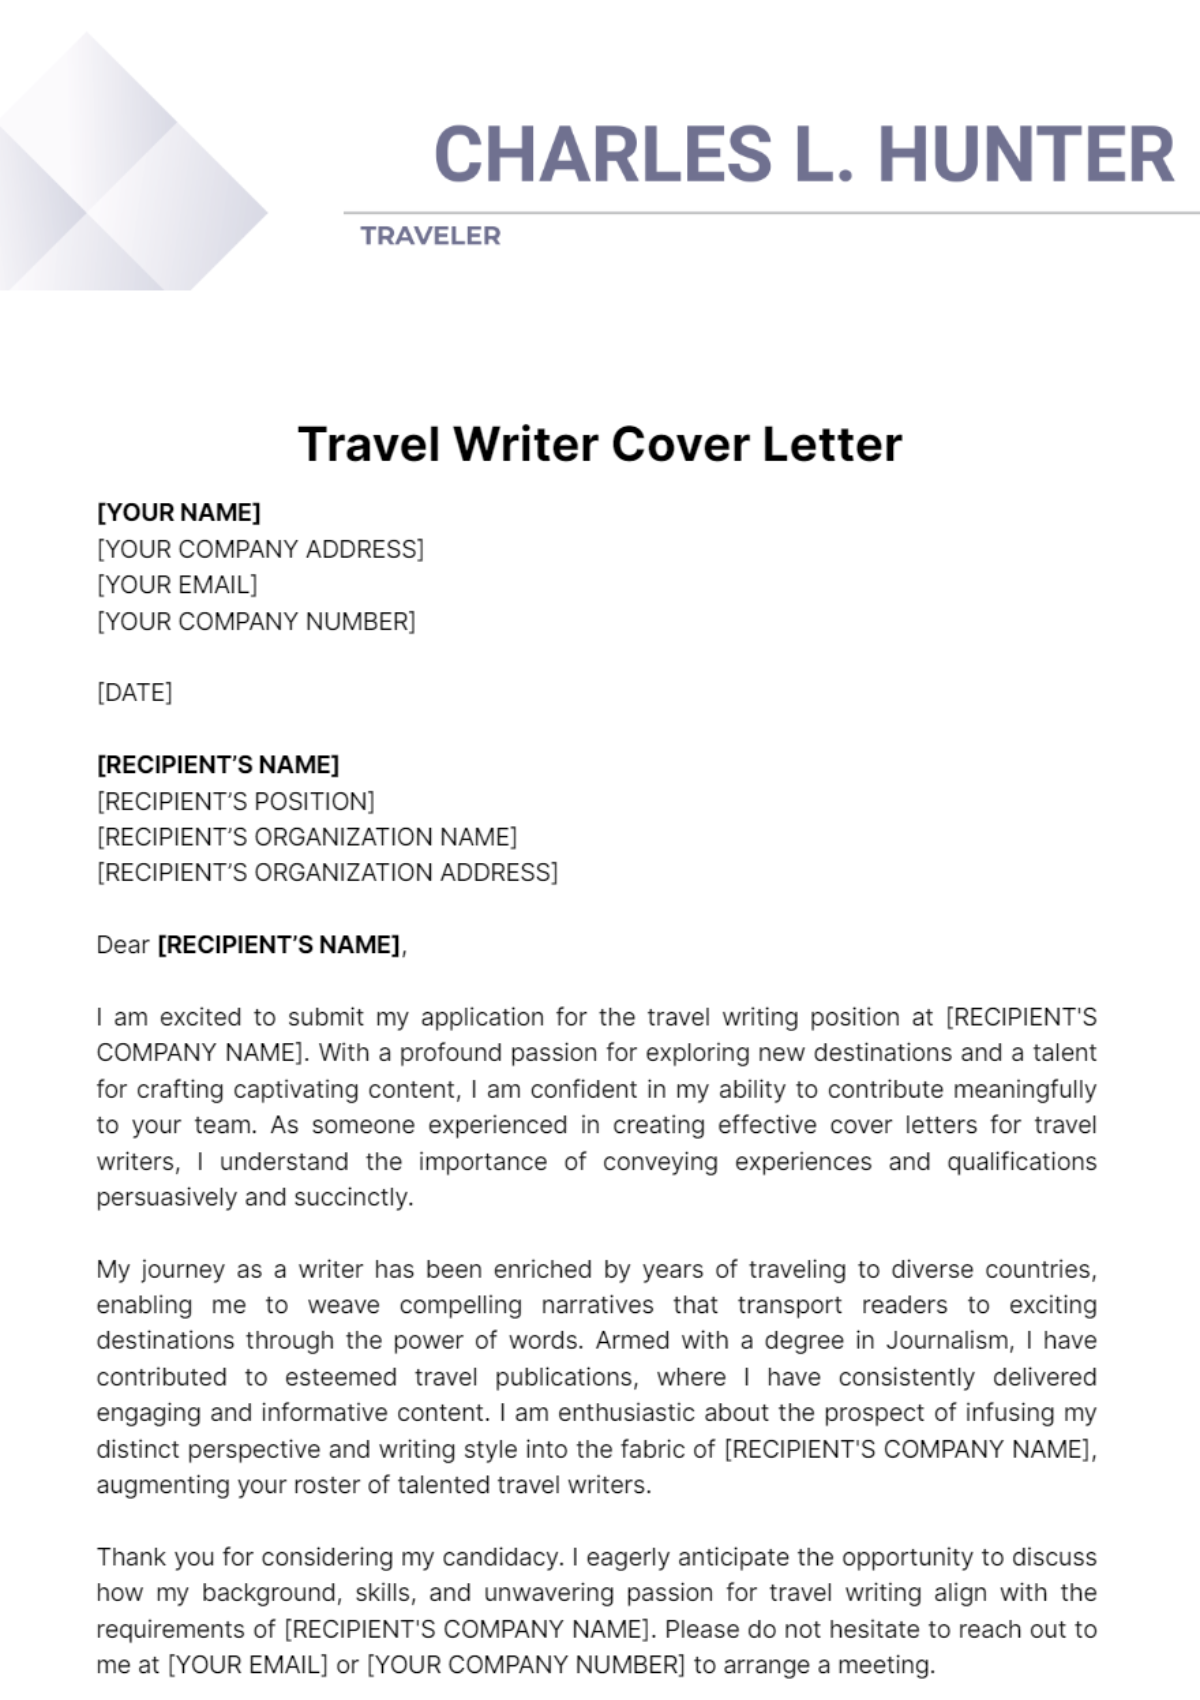 Travel Writer Cover Letter Template